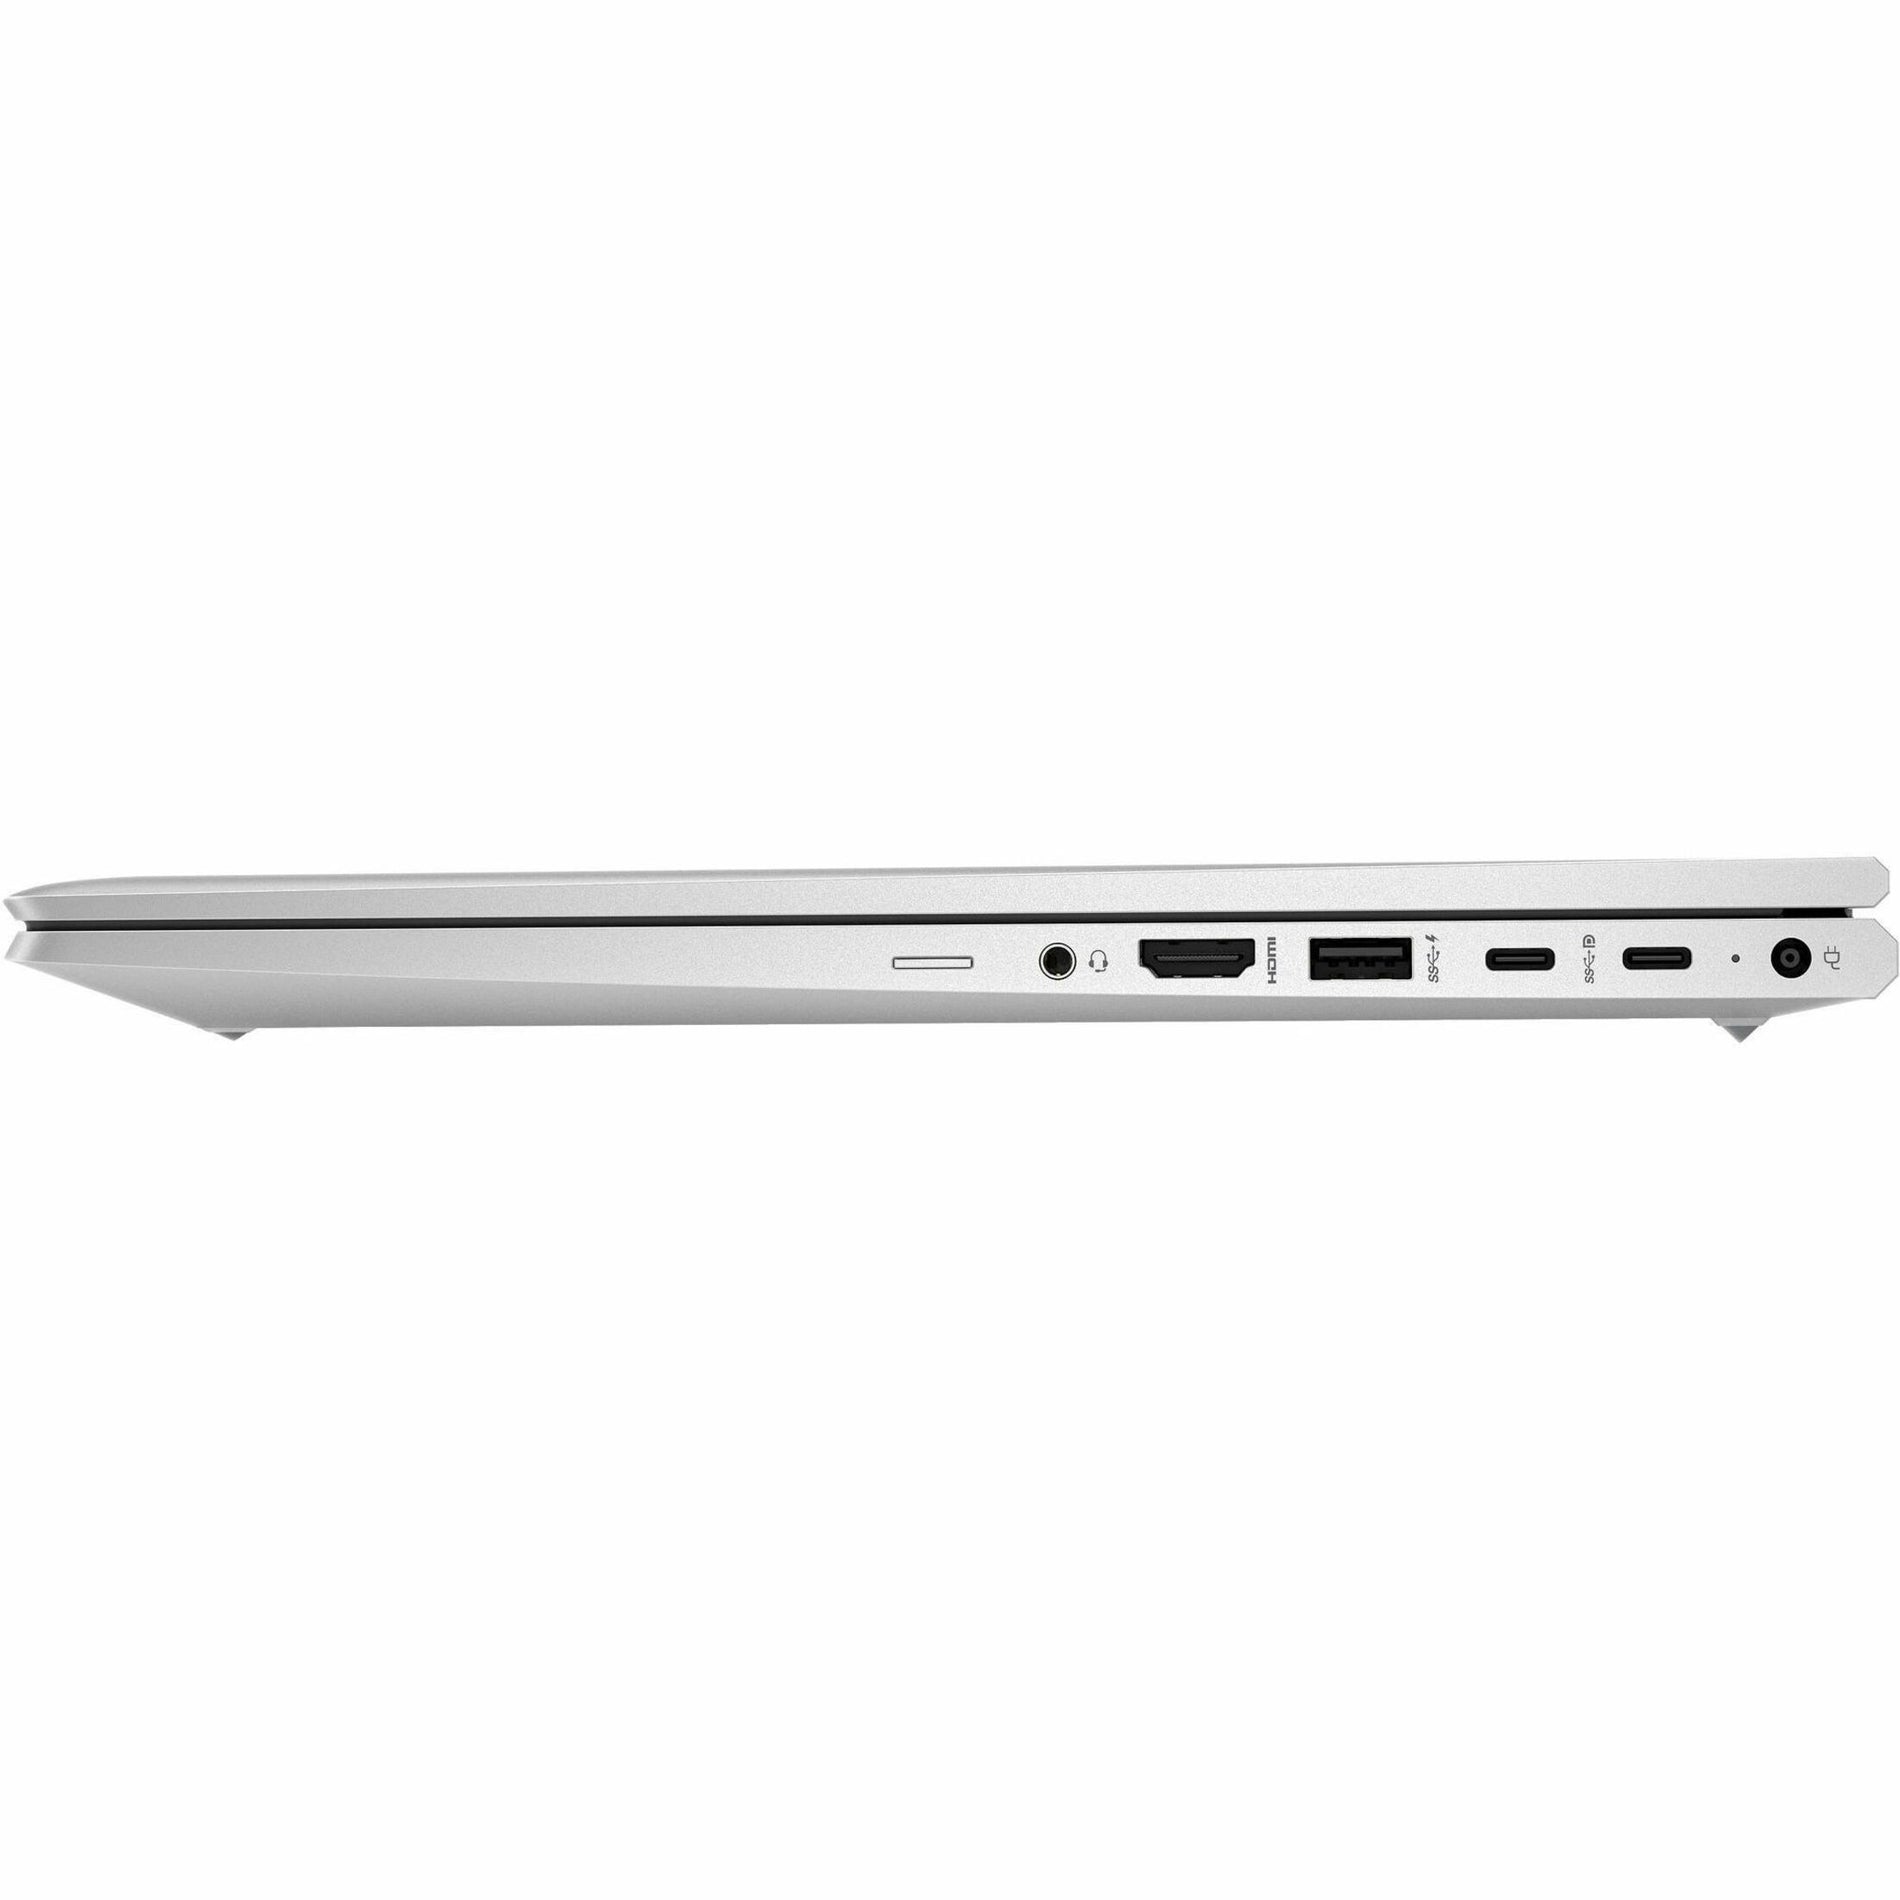 HP ProBook 450 15.6 inch G10 Notebook PC Wolf Pro Security Edition, Core i5, 8GB RAM, 256GB SSD, Windows 11 Pro